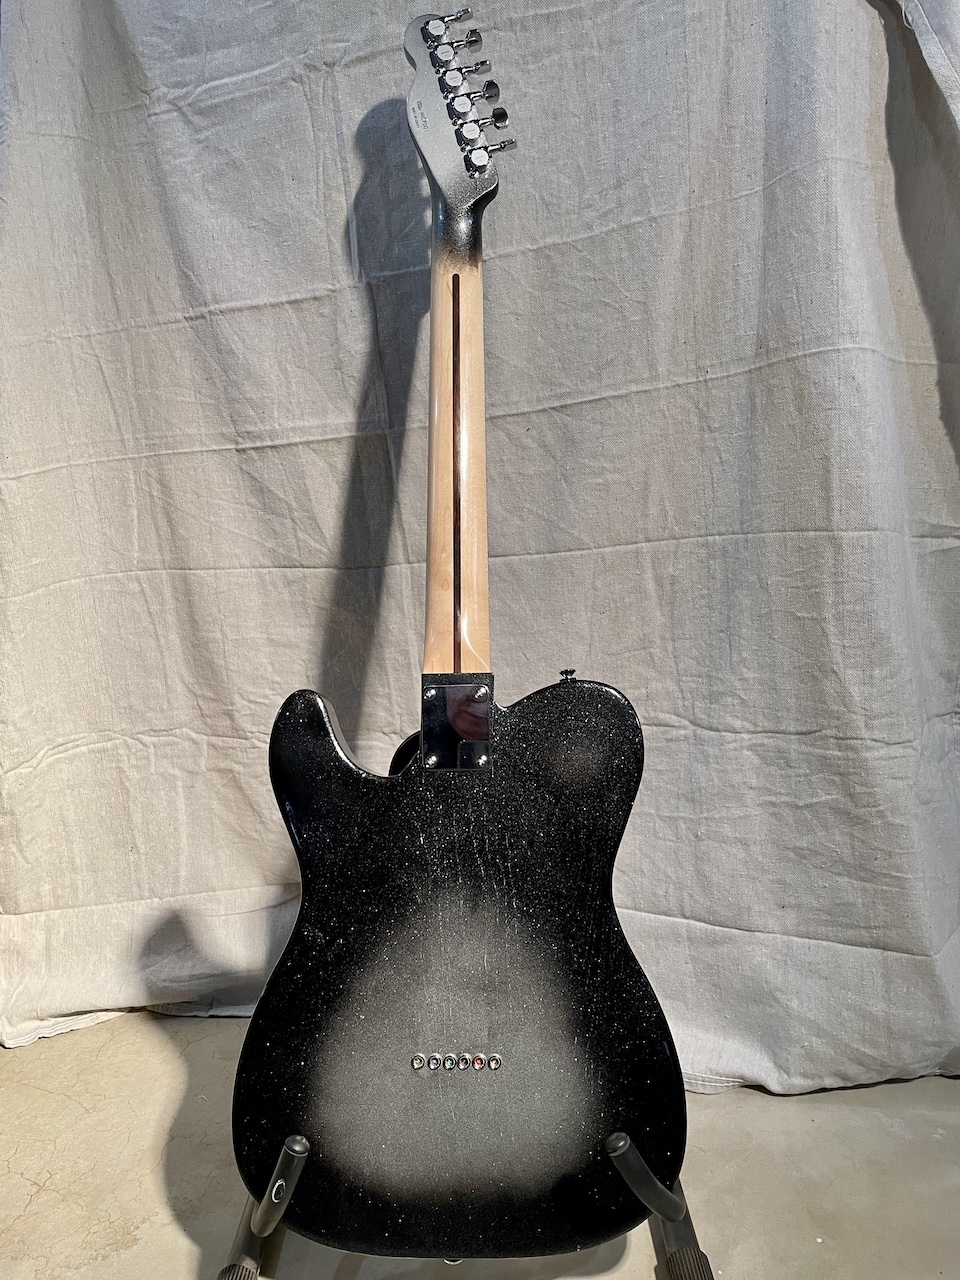 back of finished guitar